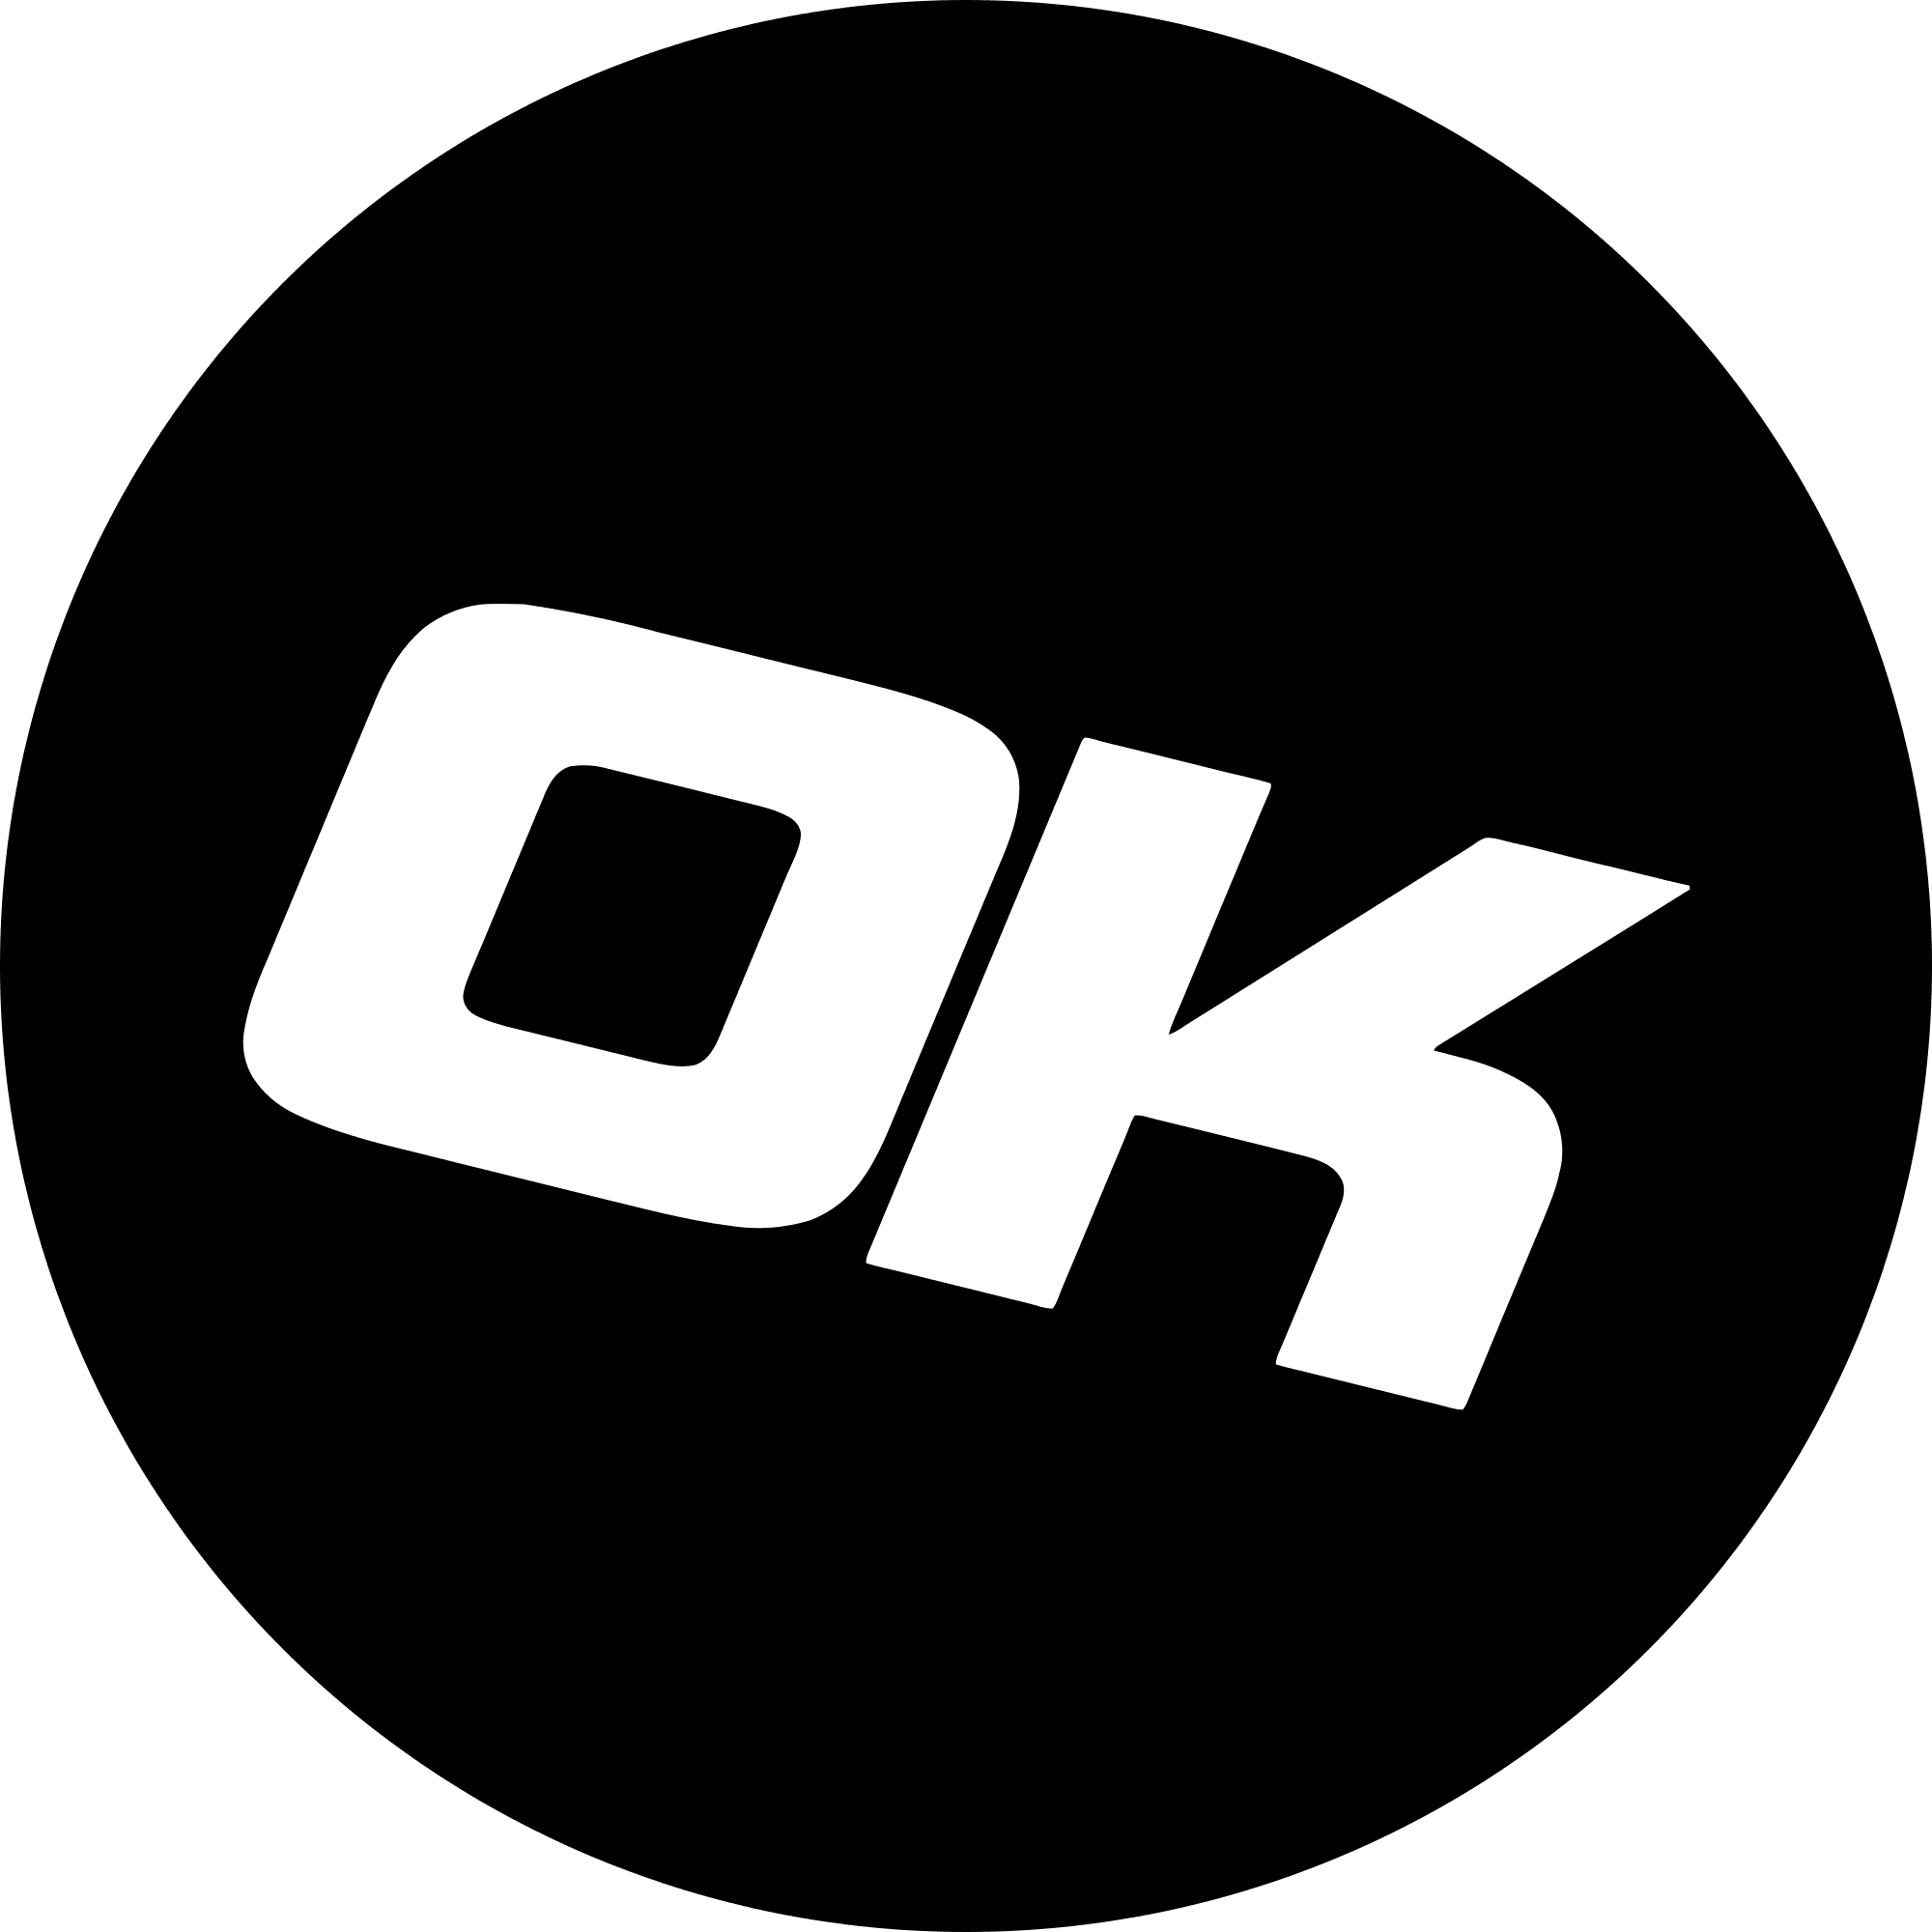 OKCash logo in png format